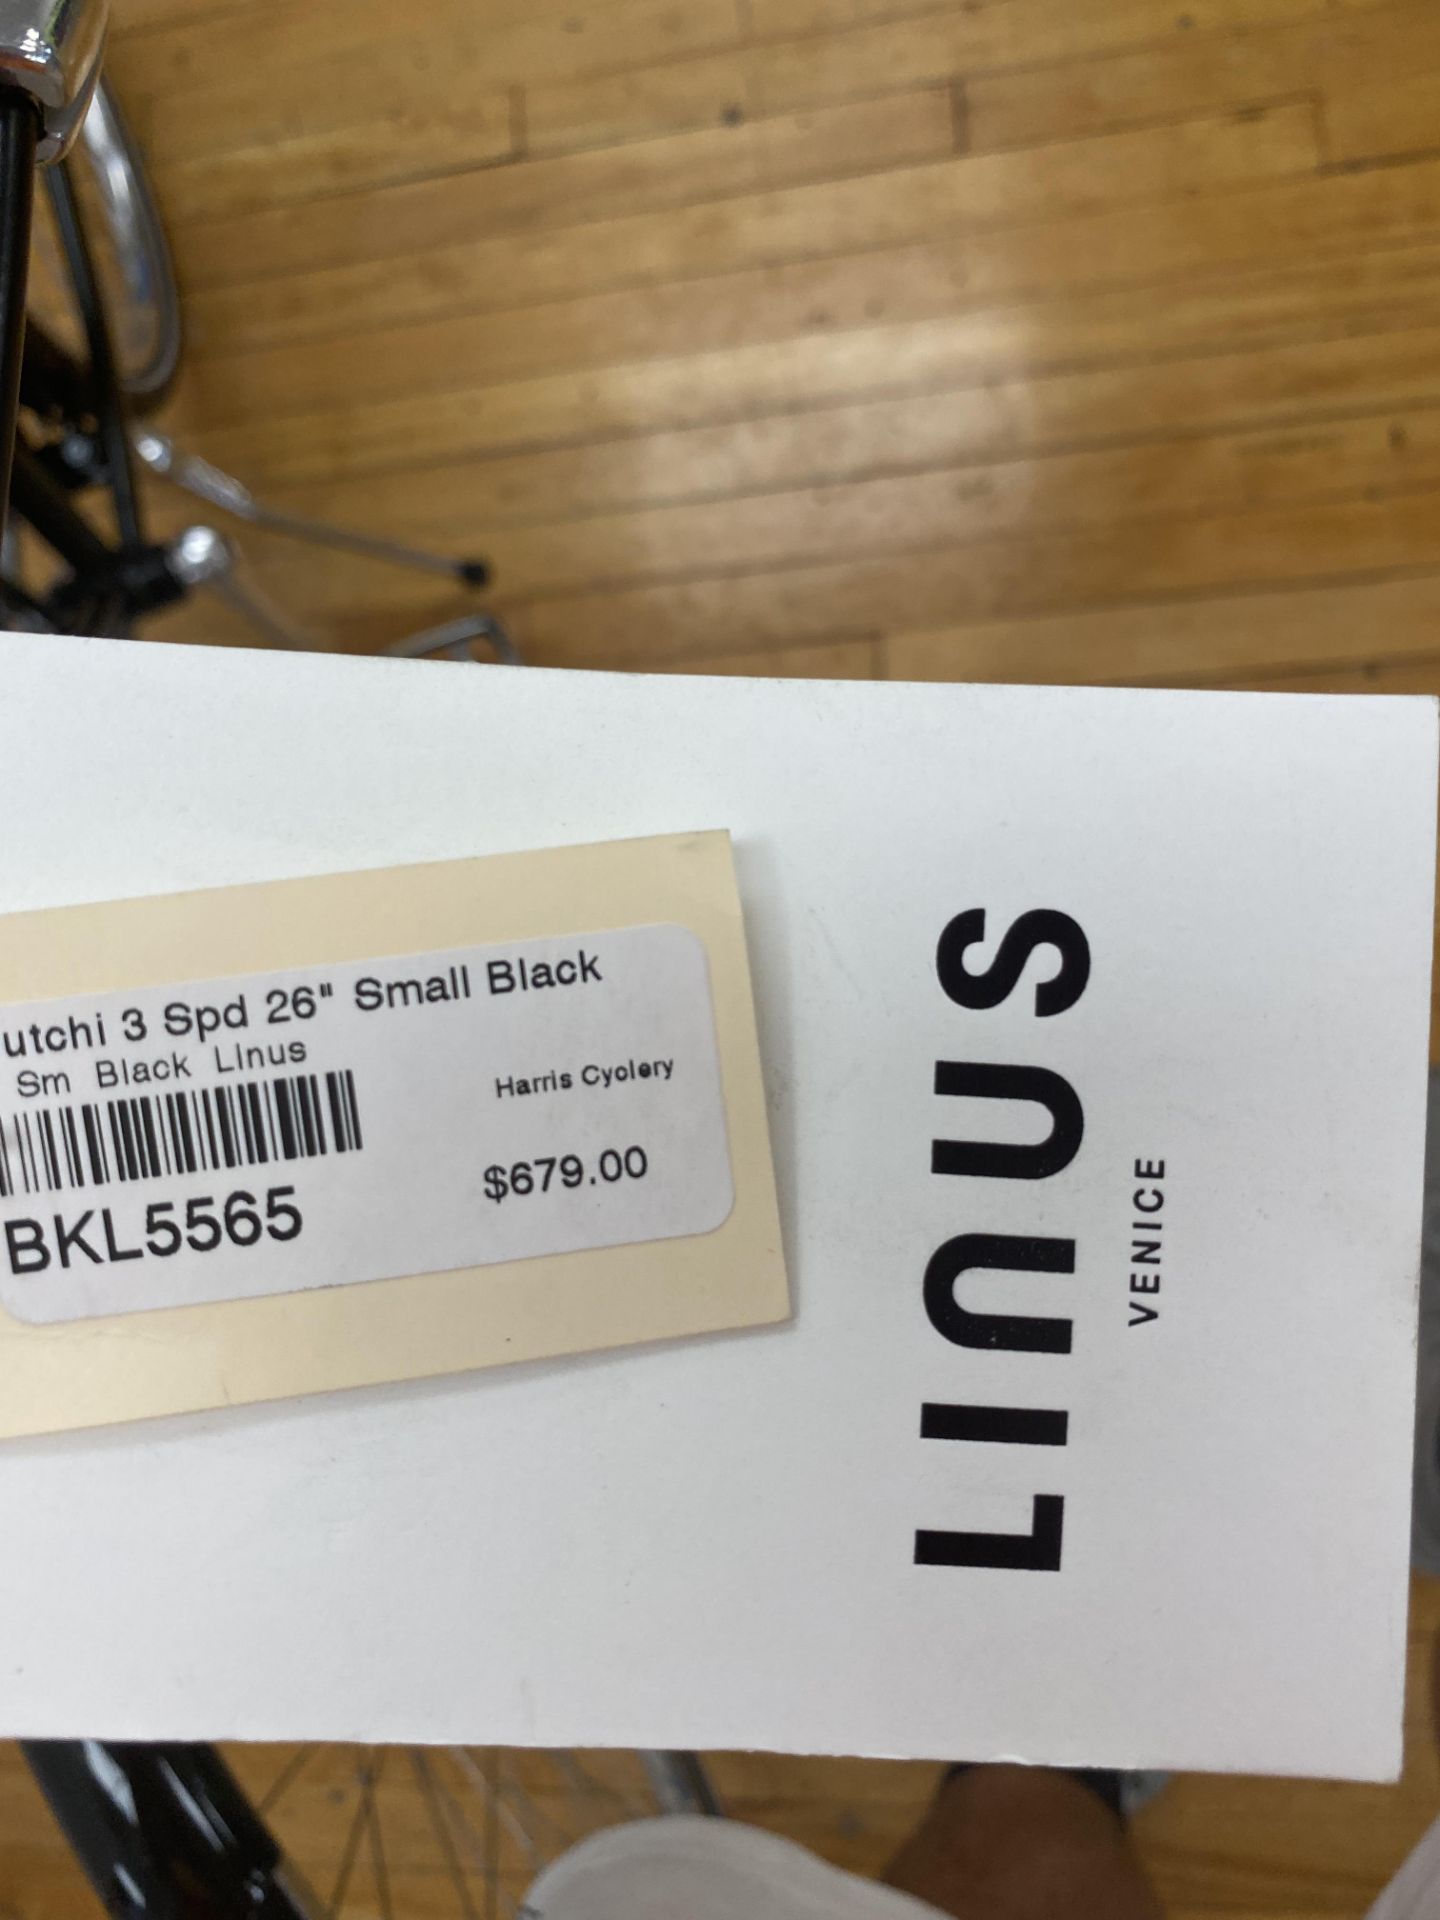 Linus Dutchi 3 Speed 26 " Small Black $680 Retail - Image 3 of 3